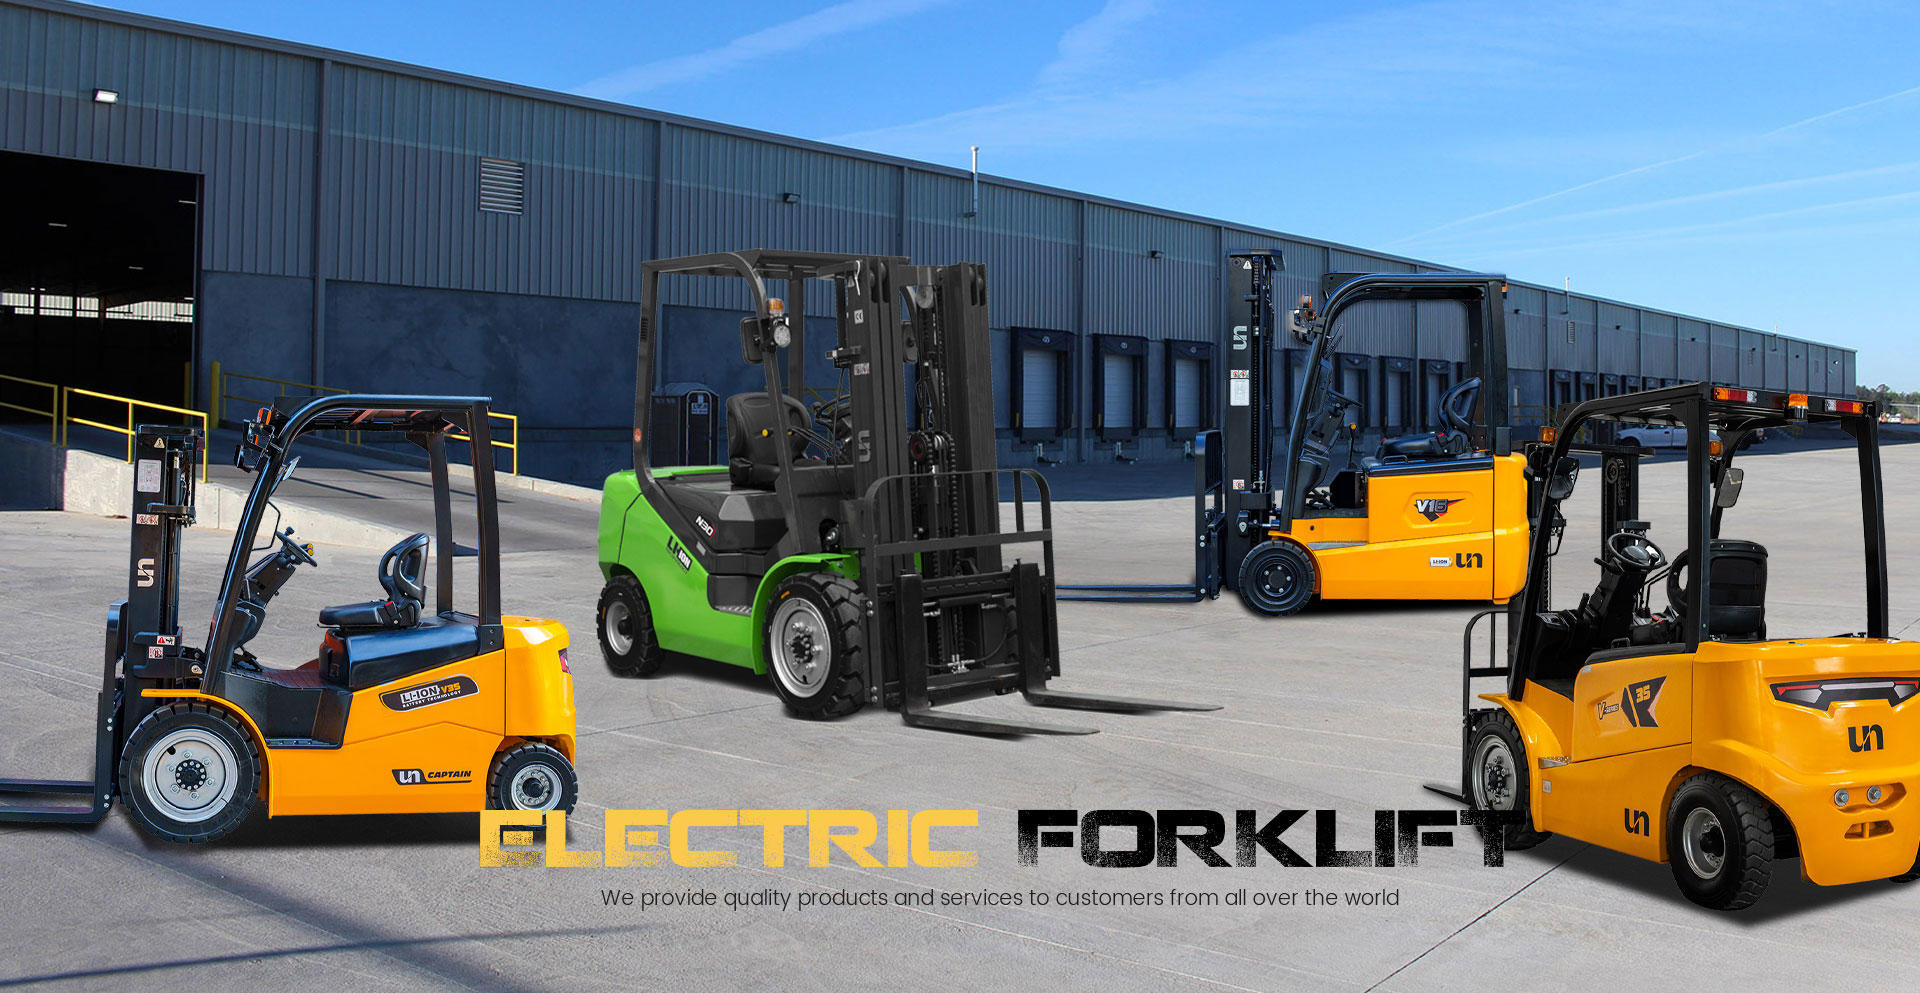 Zhejiang UN Forklift Co., Ltd.